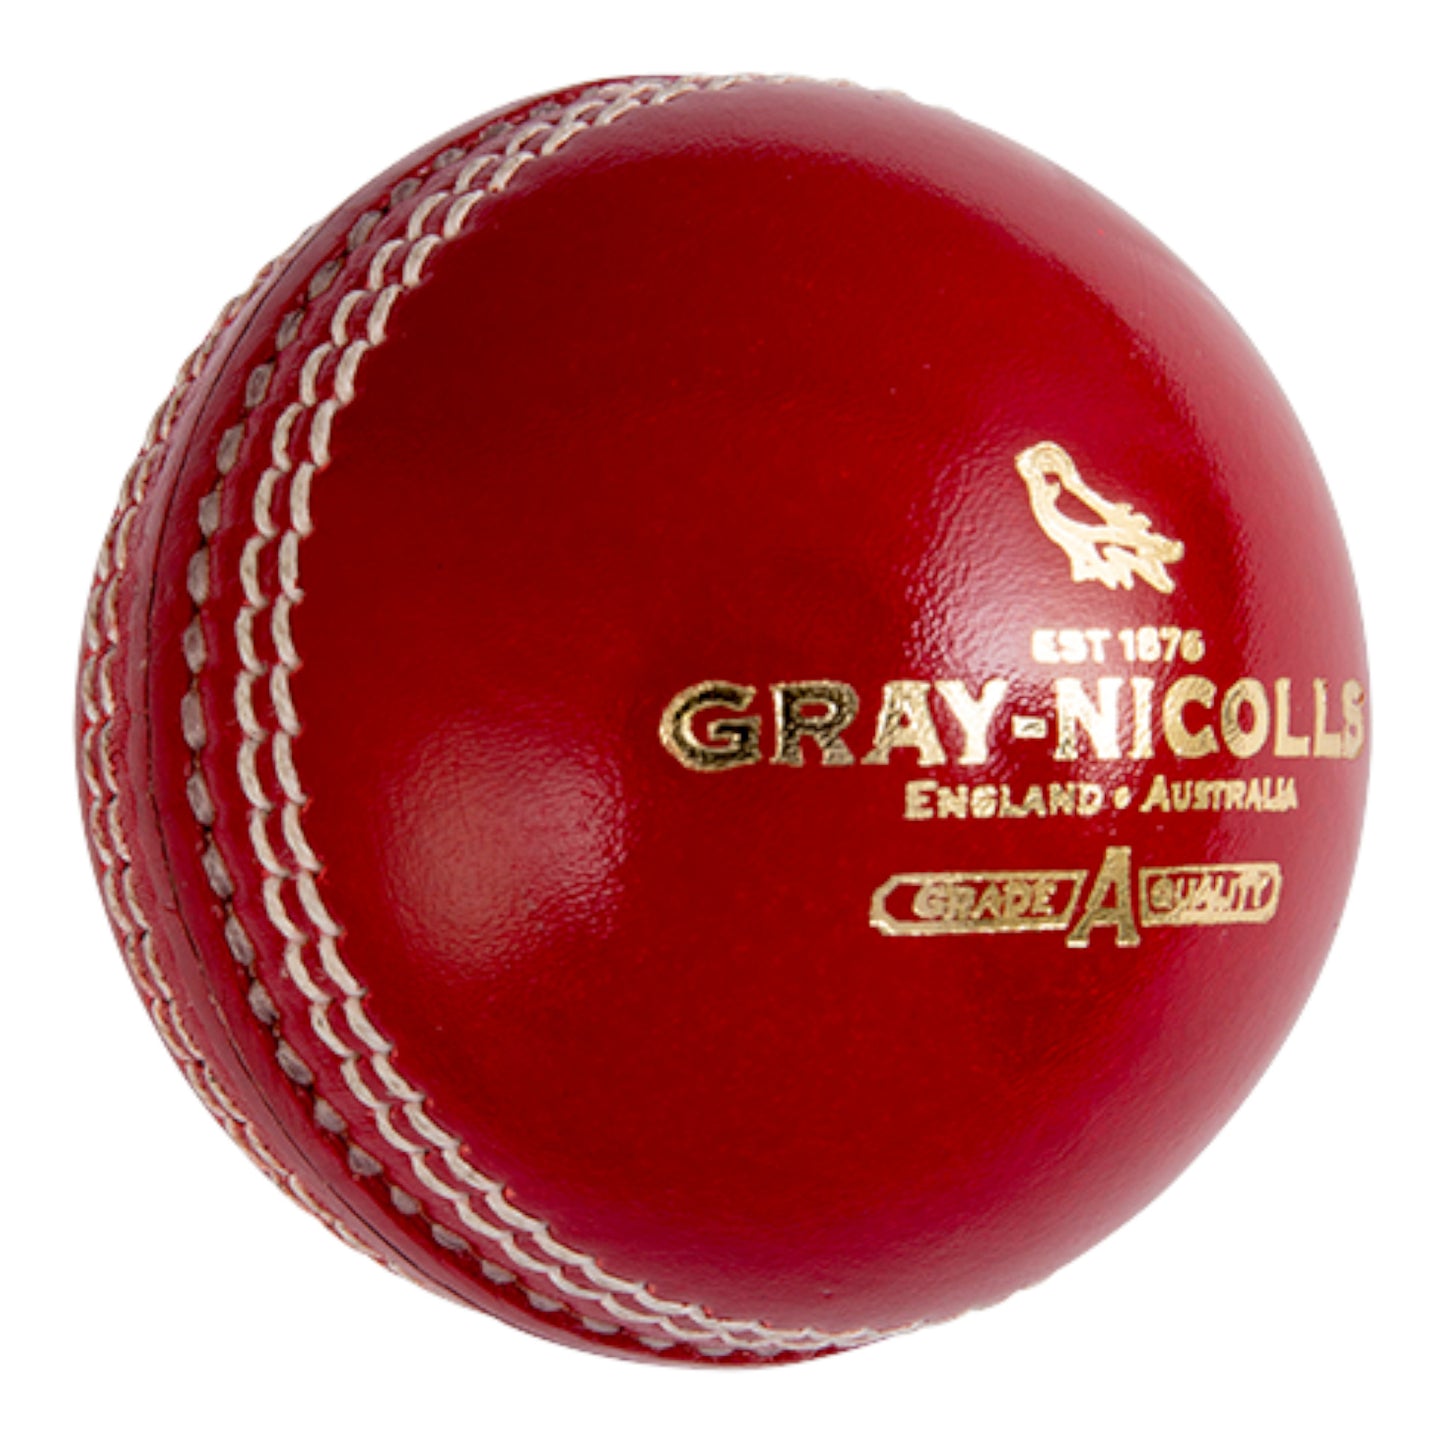 Gray Nicolls Crest Academy Cricket Ball - Red